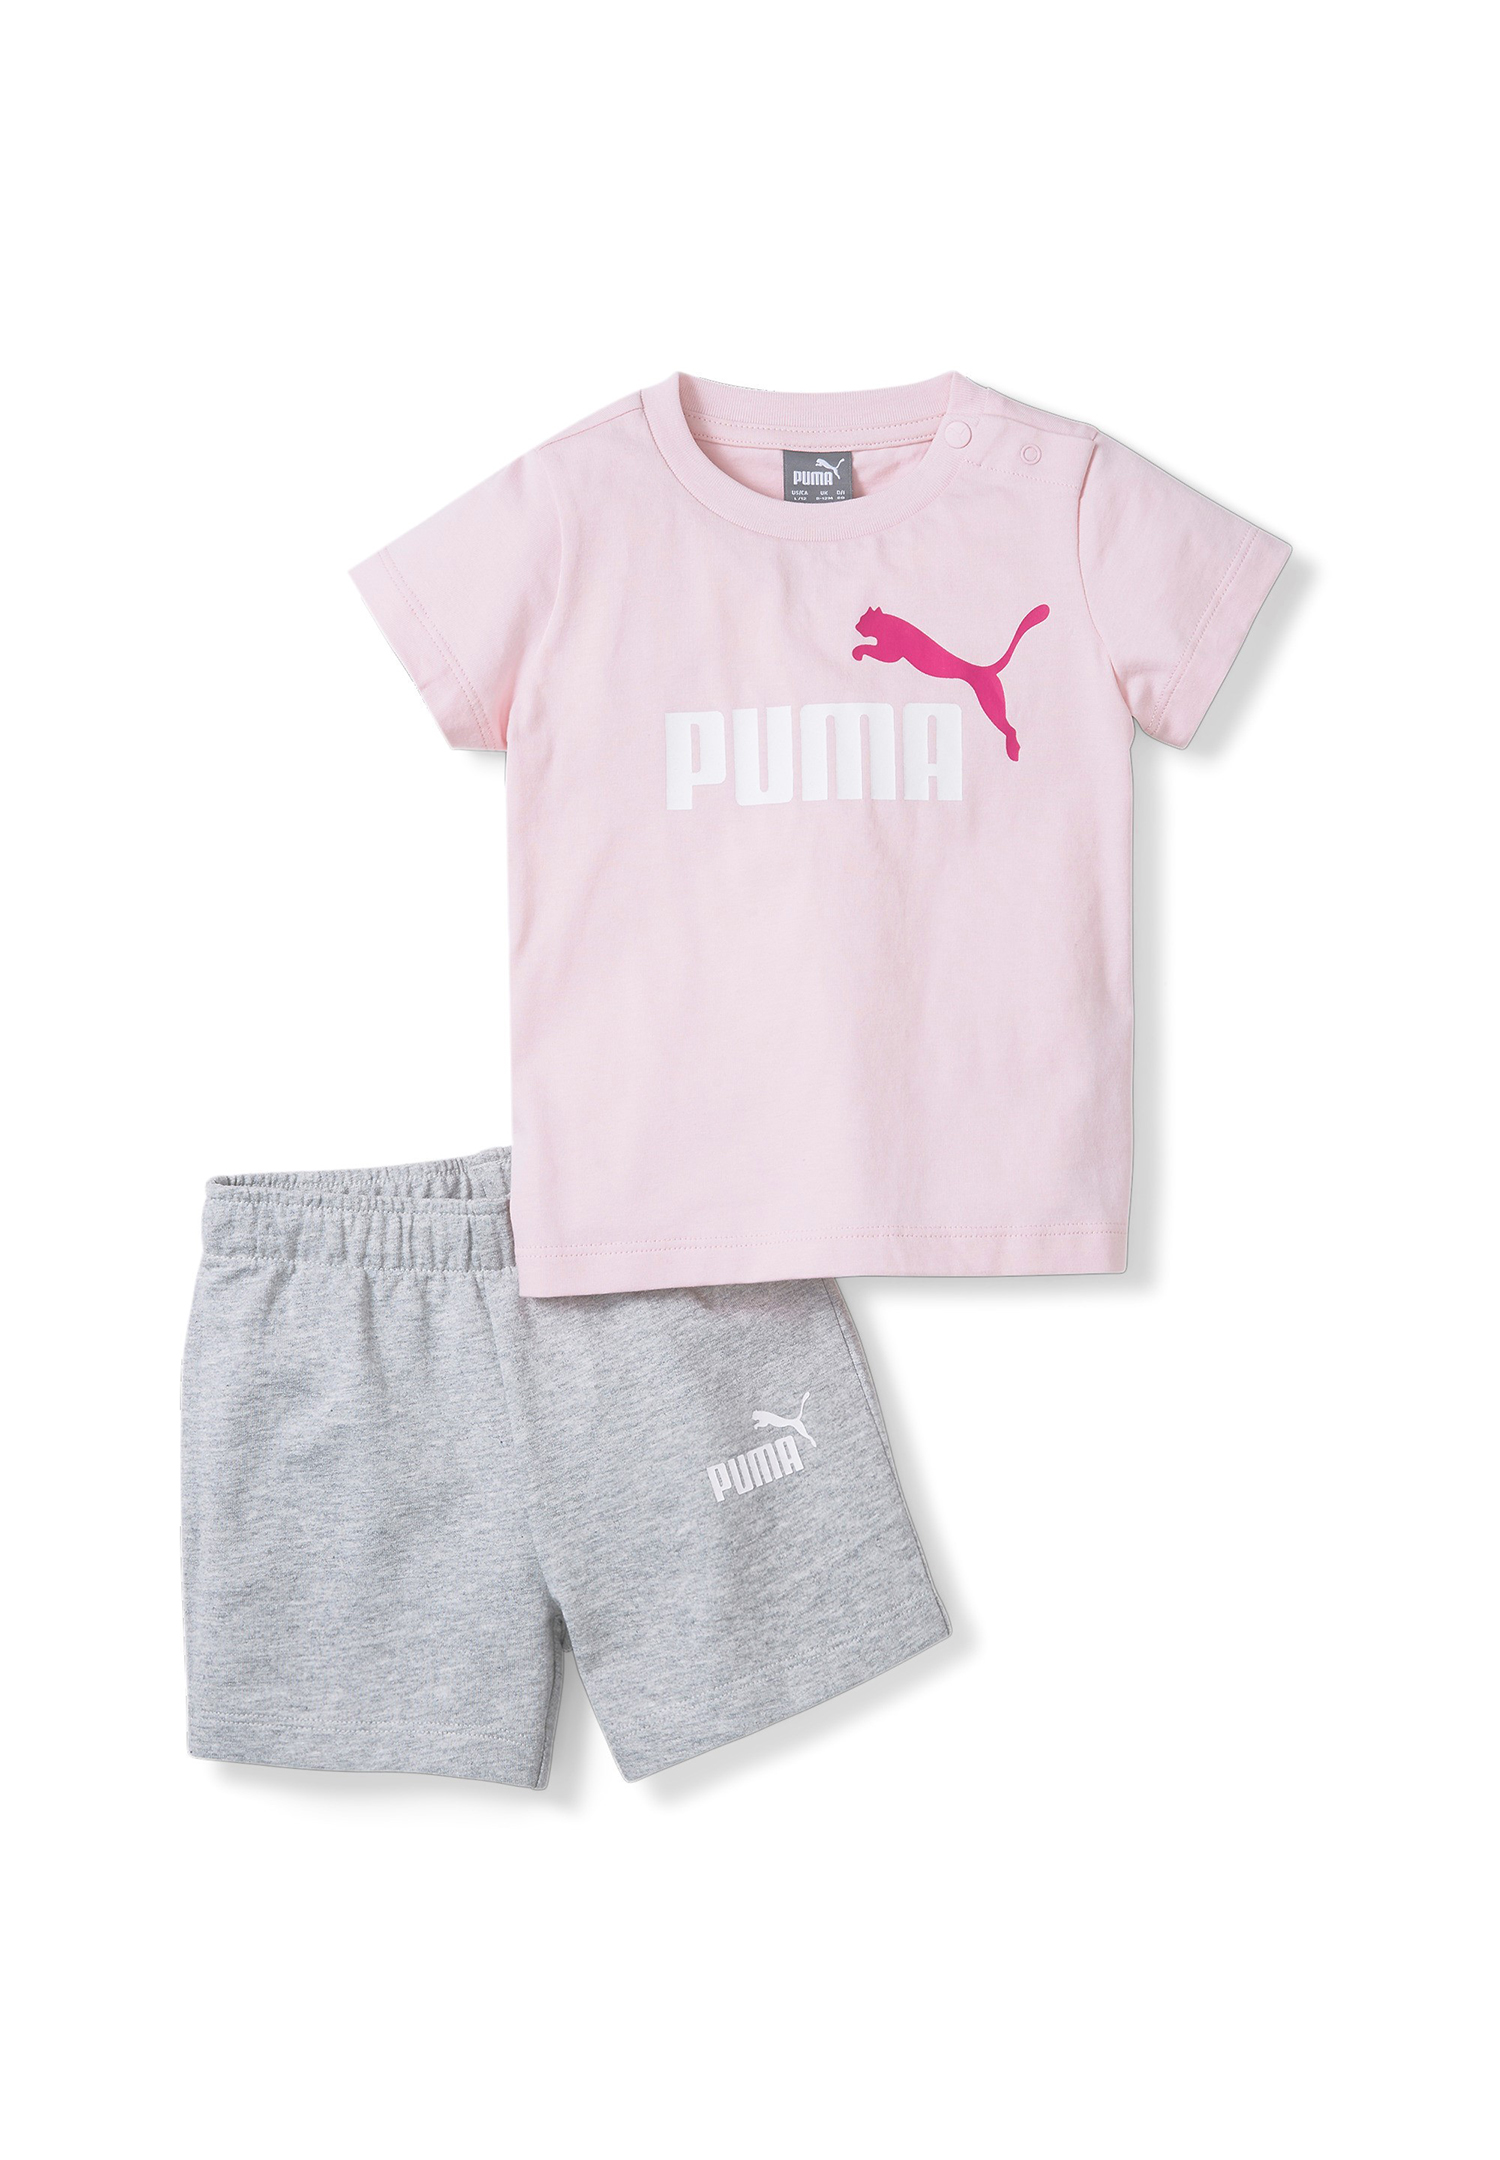 Puma Minicats Tee & Shorts Set rosa/grau 845839 16